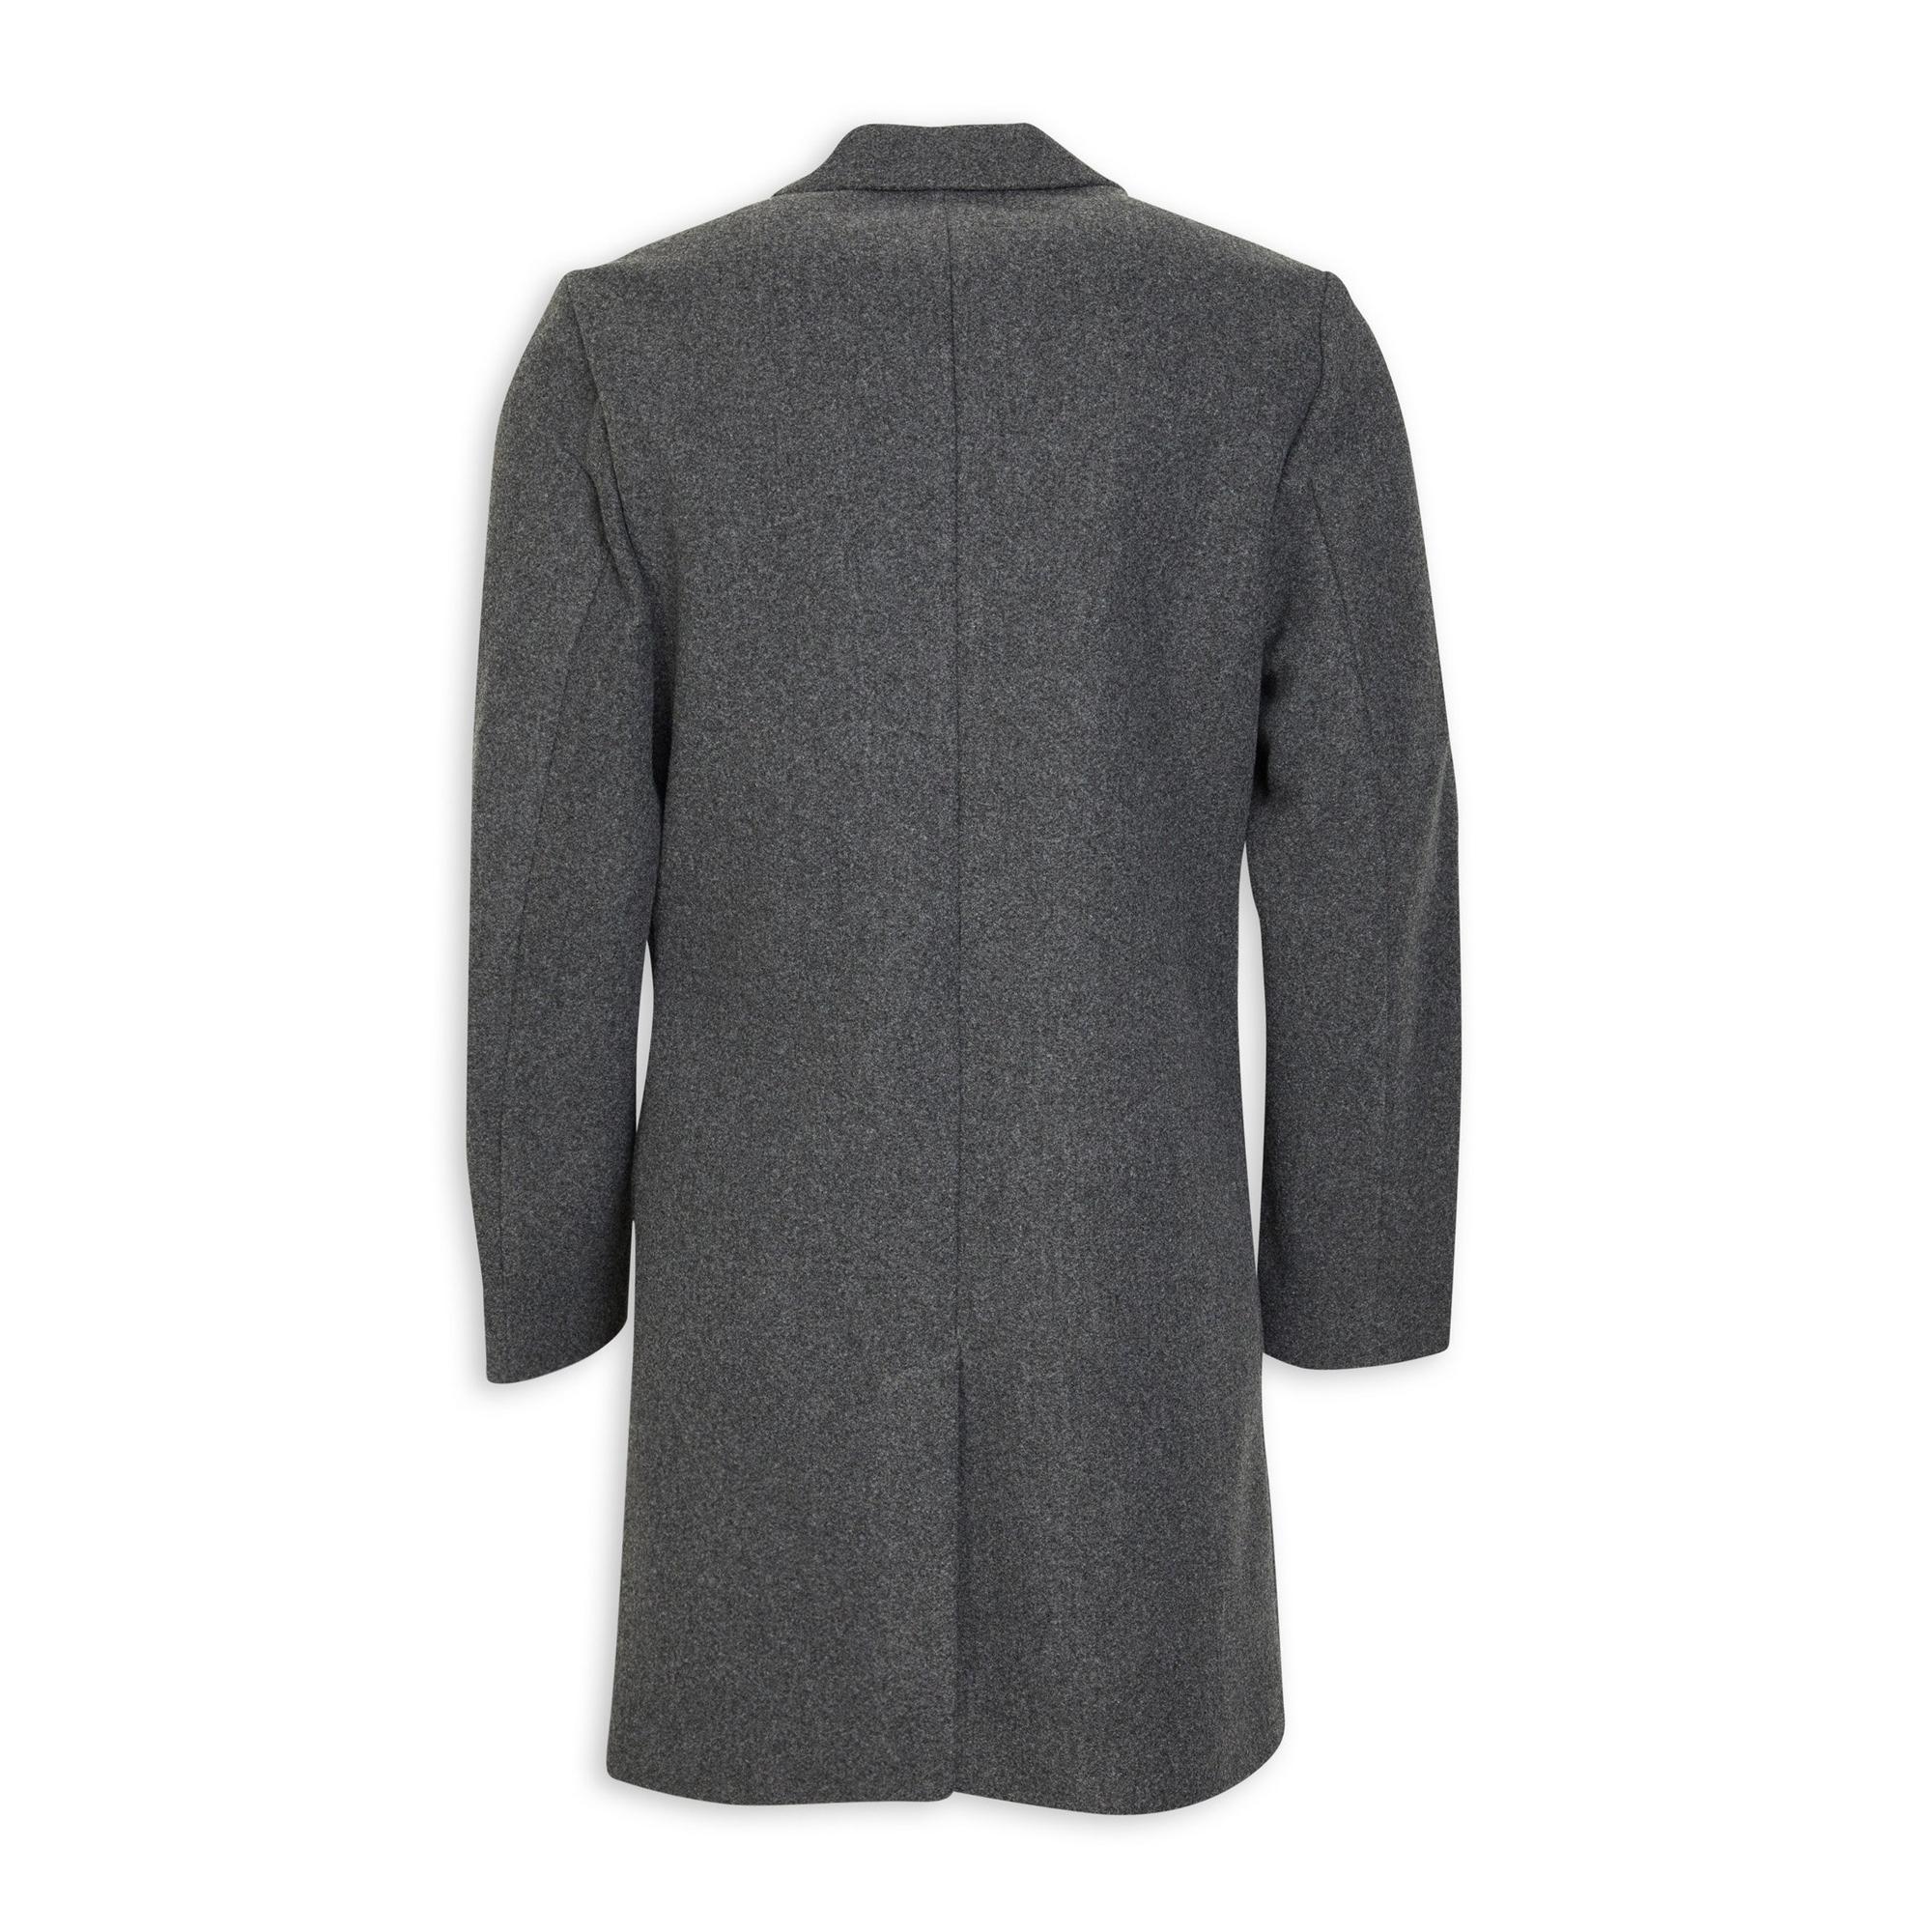 Fashion Wholesale Grey Color Melton Trench Coat Men Winter Long Sleeve Jacket